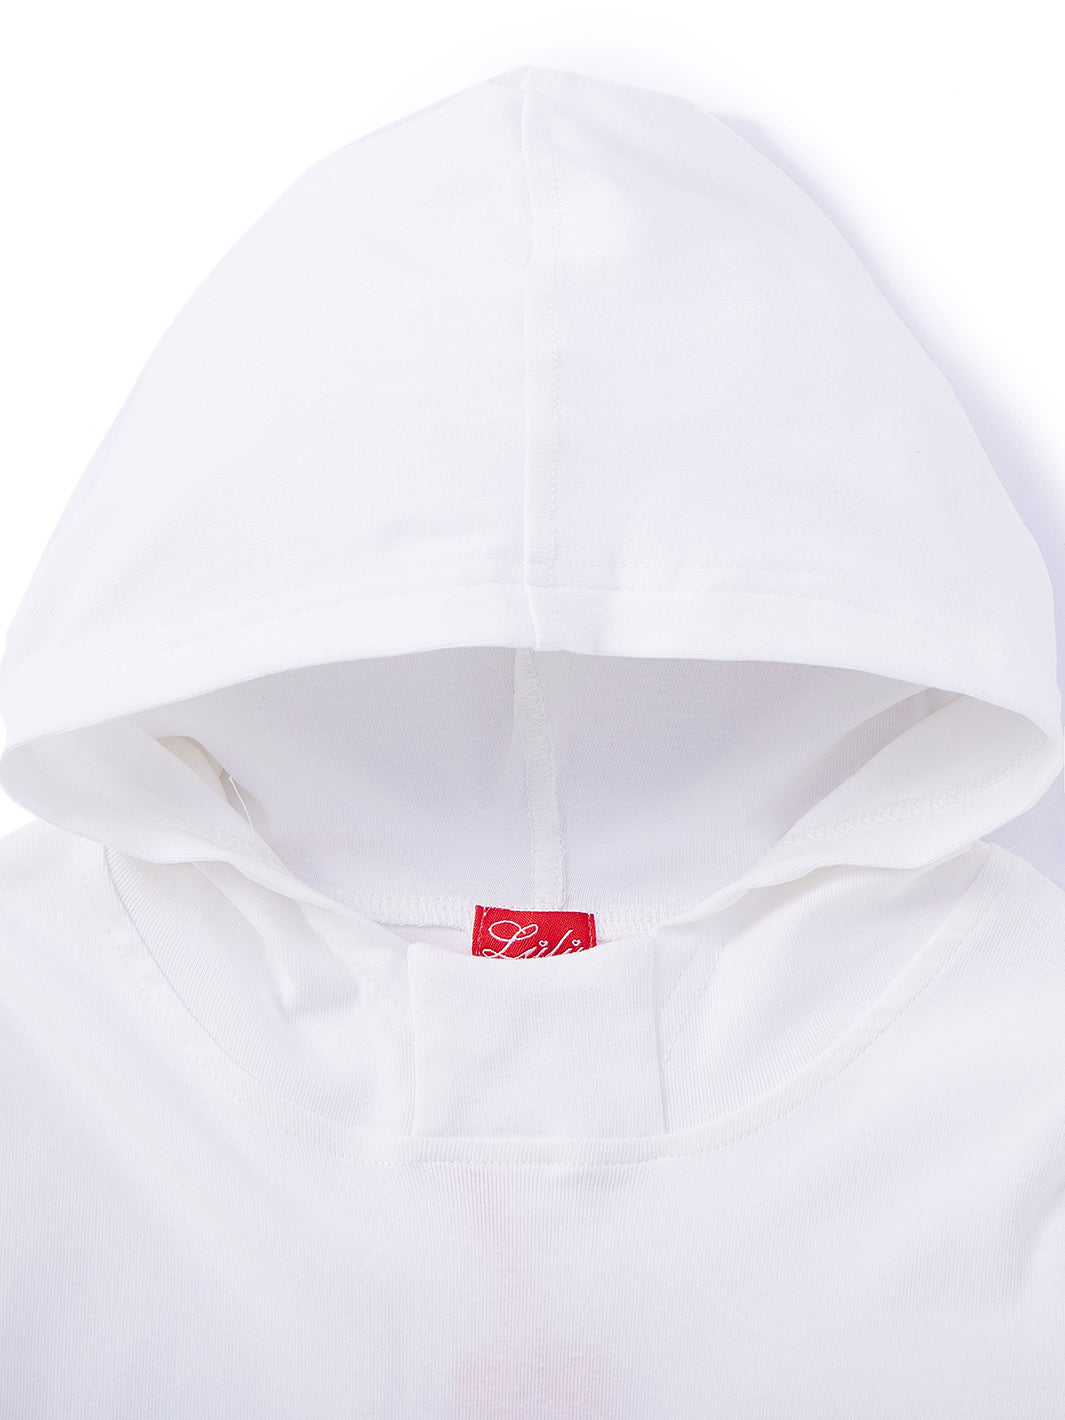 Basic Rib Hood Top - White